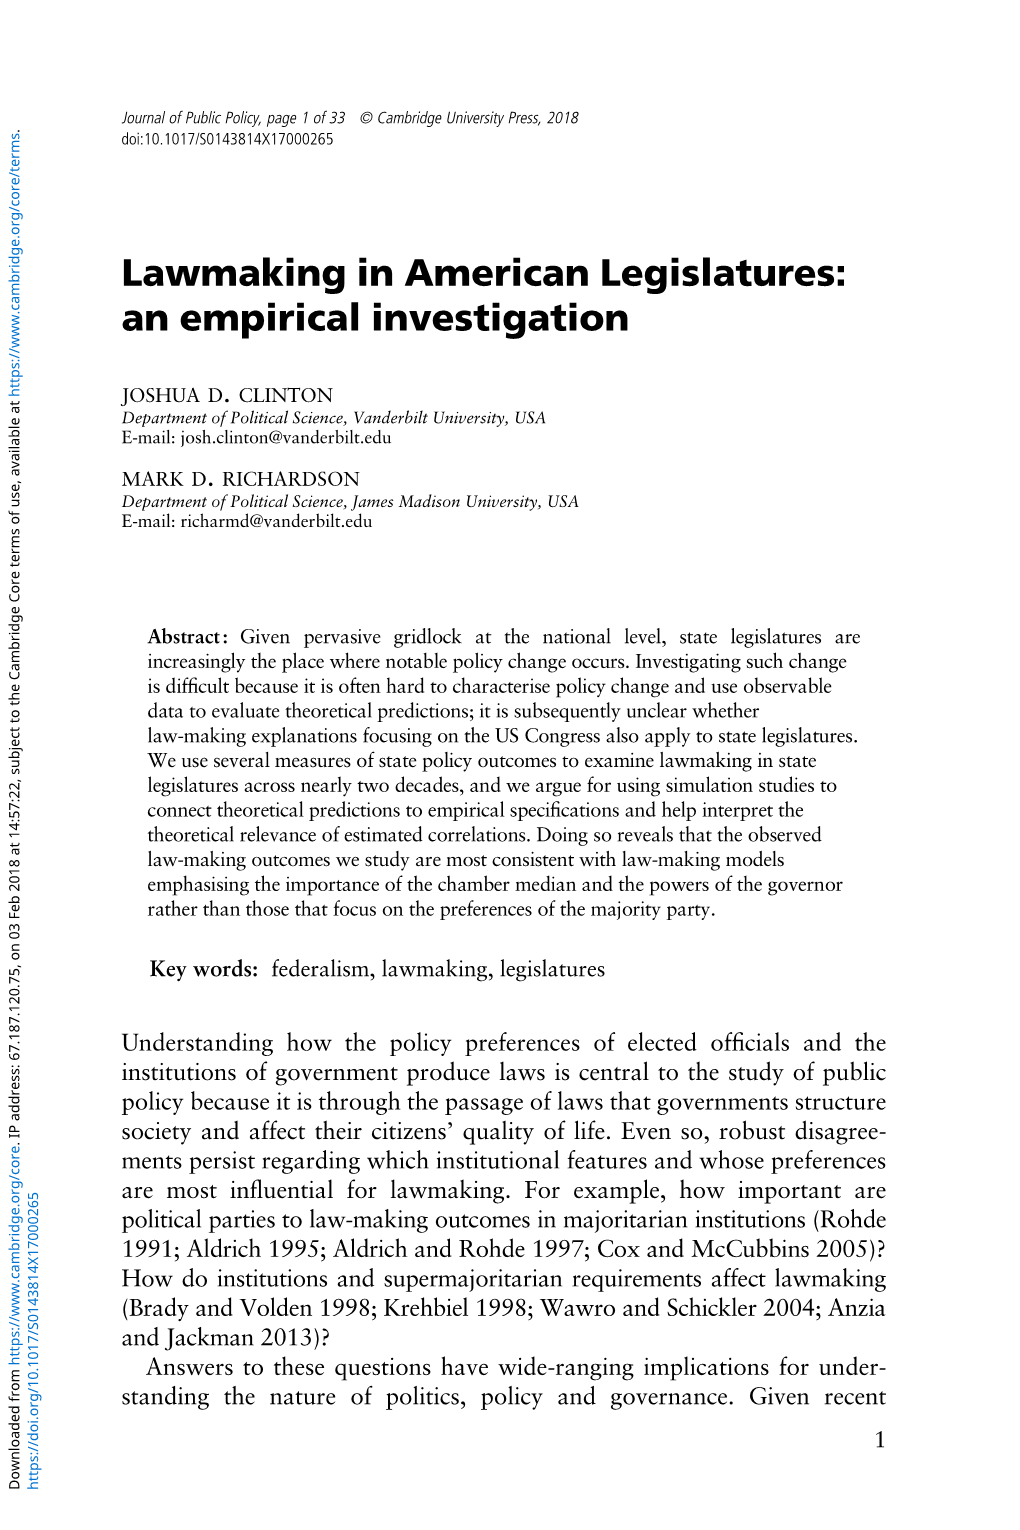 Lawmaking in American Legislatures: an Empirical Investigation